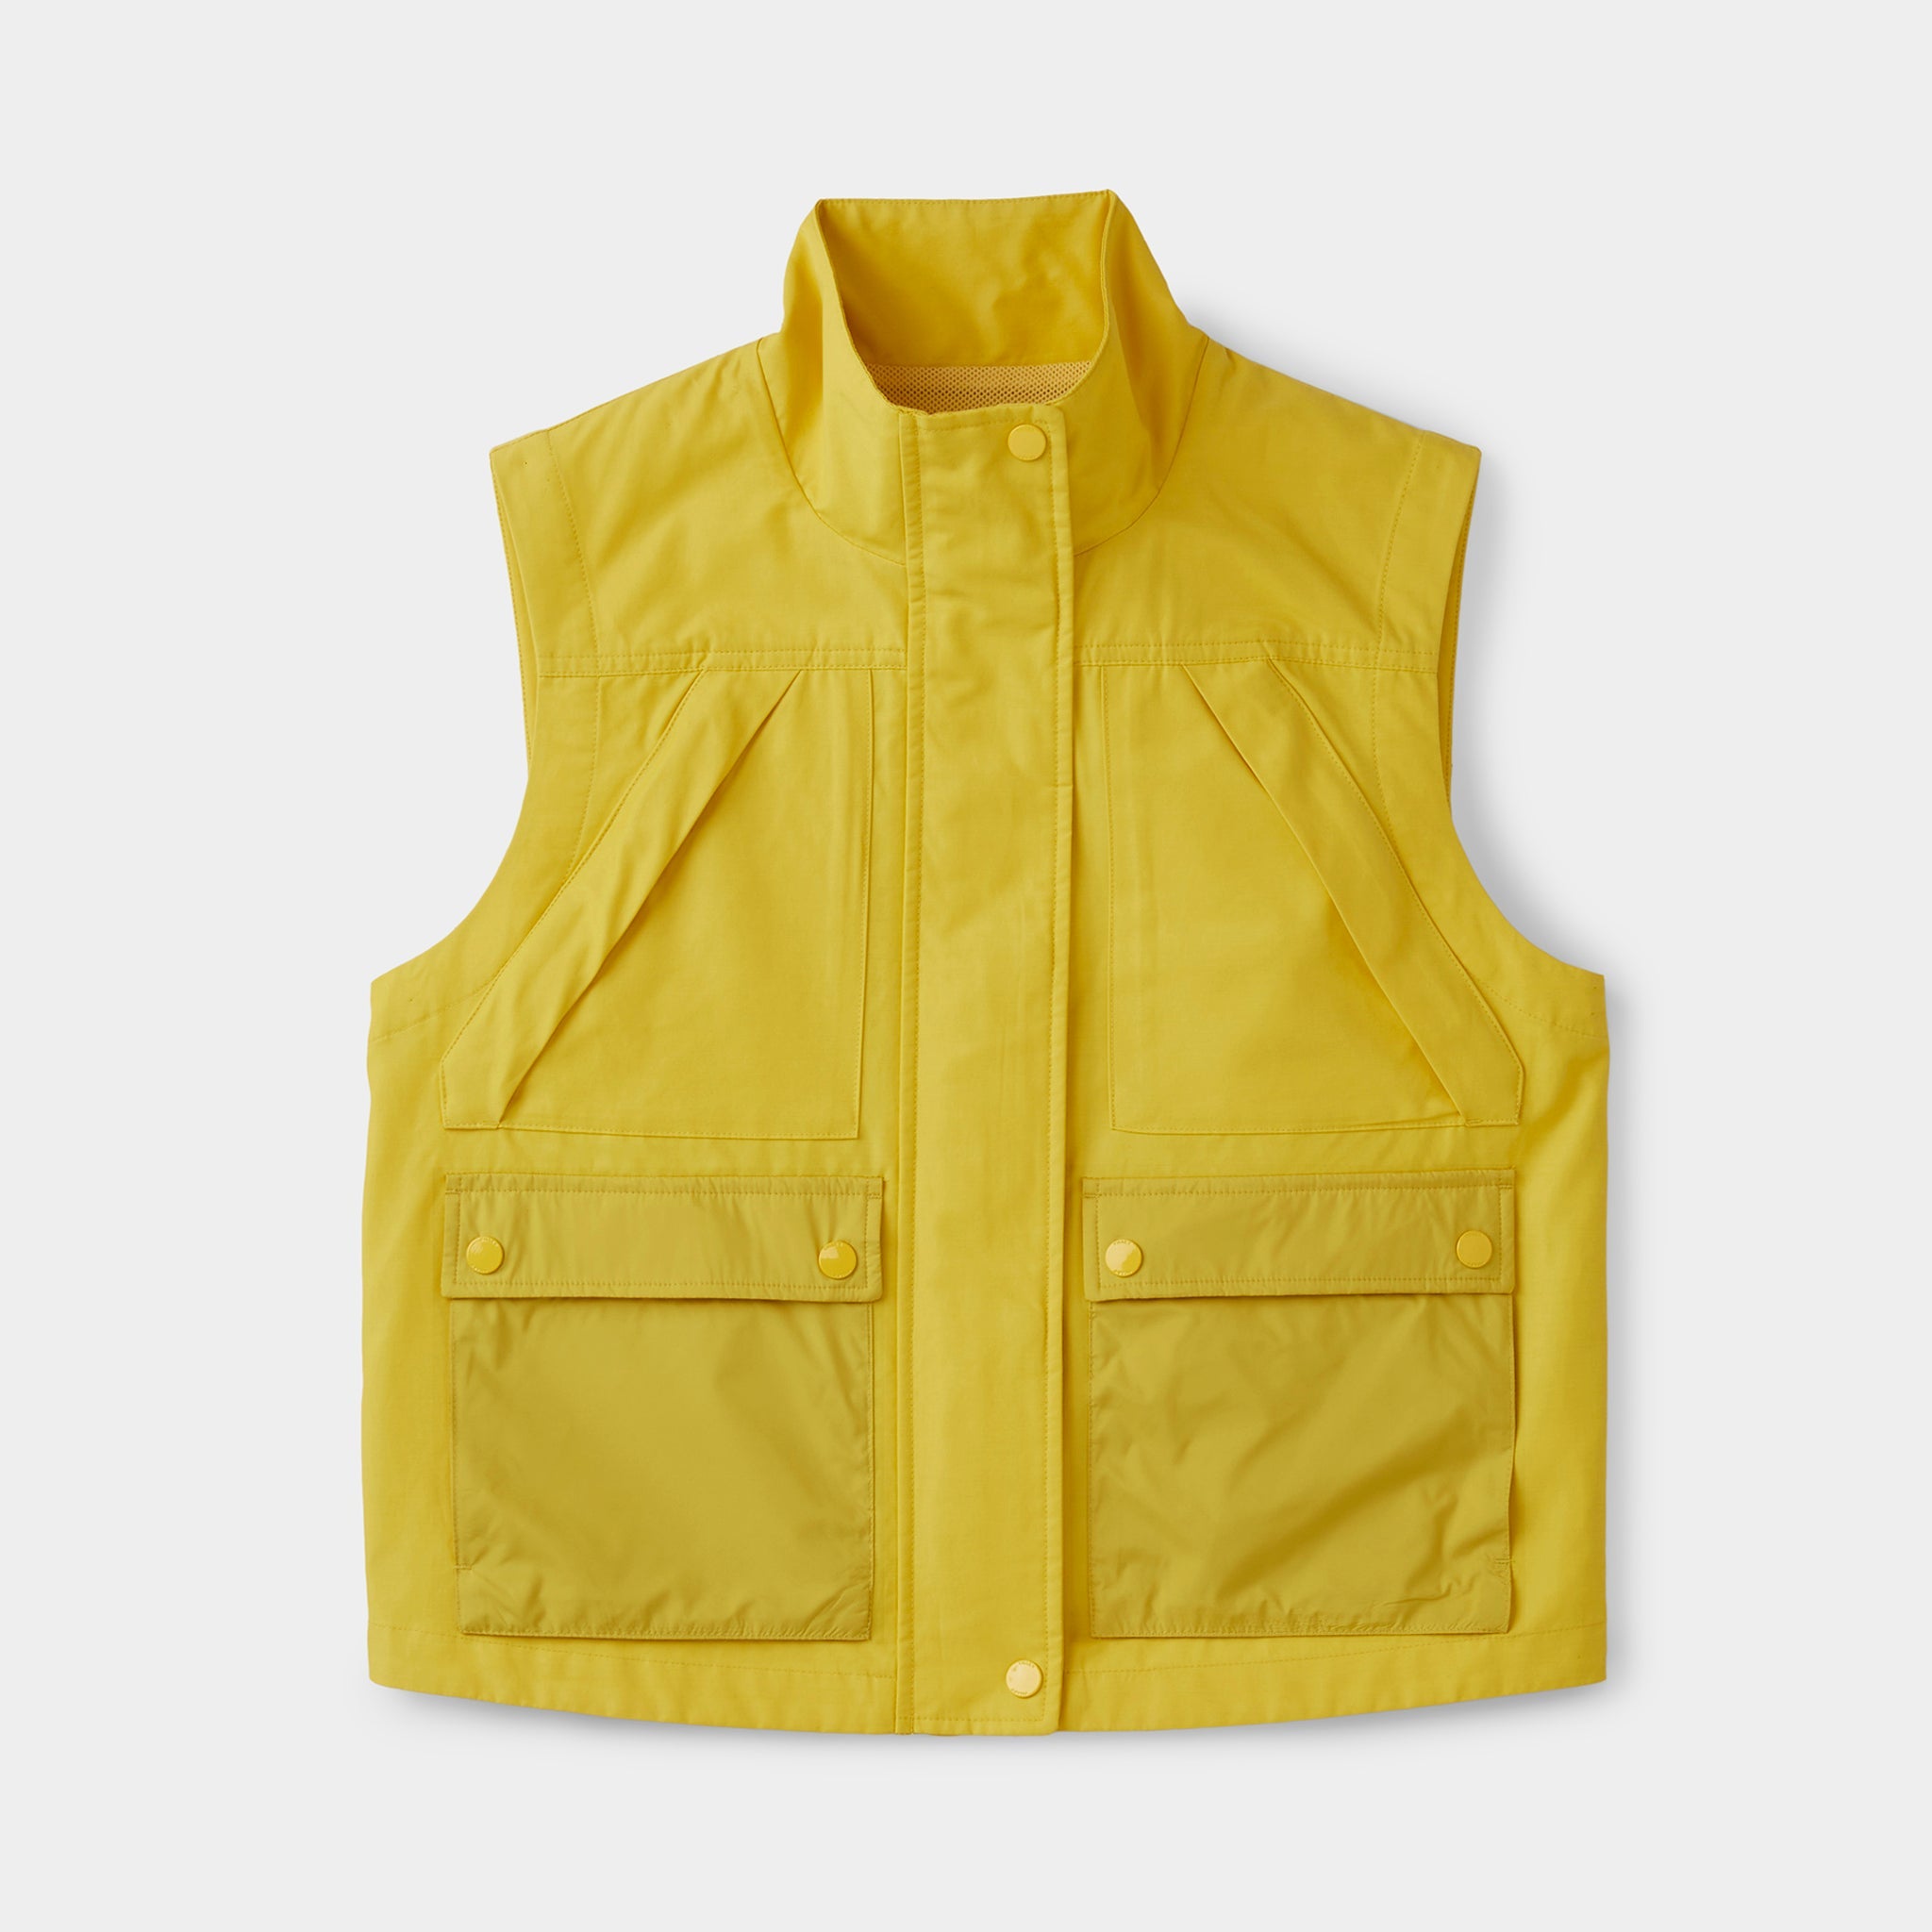 Shop Unisex Plain Oversized Fly-Fishing Vest Vests & Gillets by Luckyday